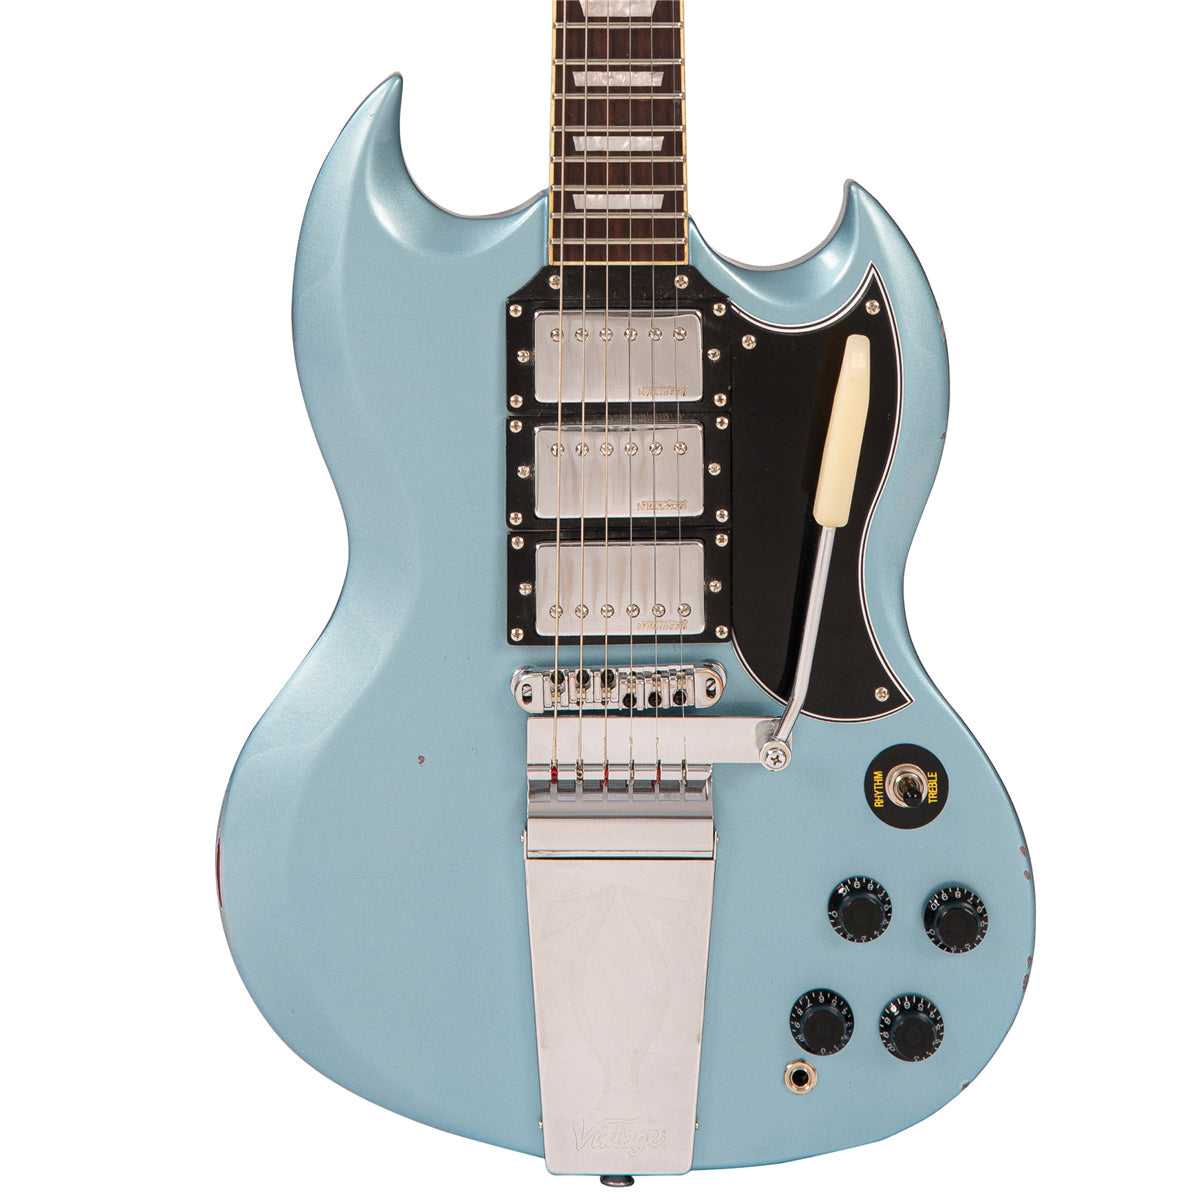 SOLD - Vintage VS63 ProShop Unique ~ Gun Hill Blue, Electric Guitars for sale at Richards Guitars.